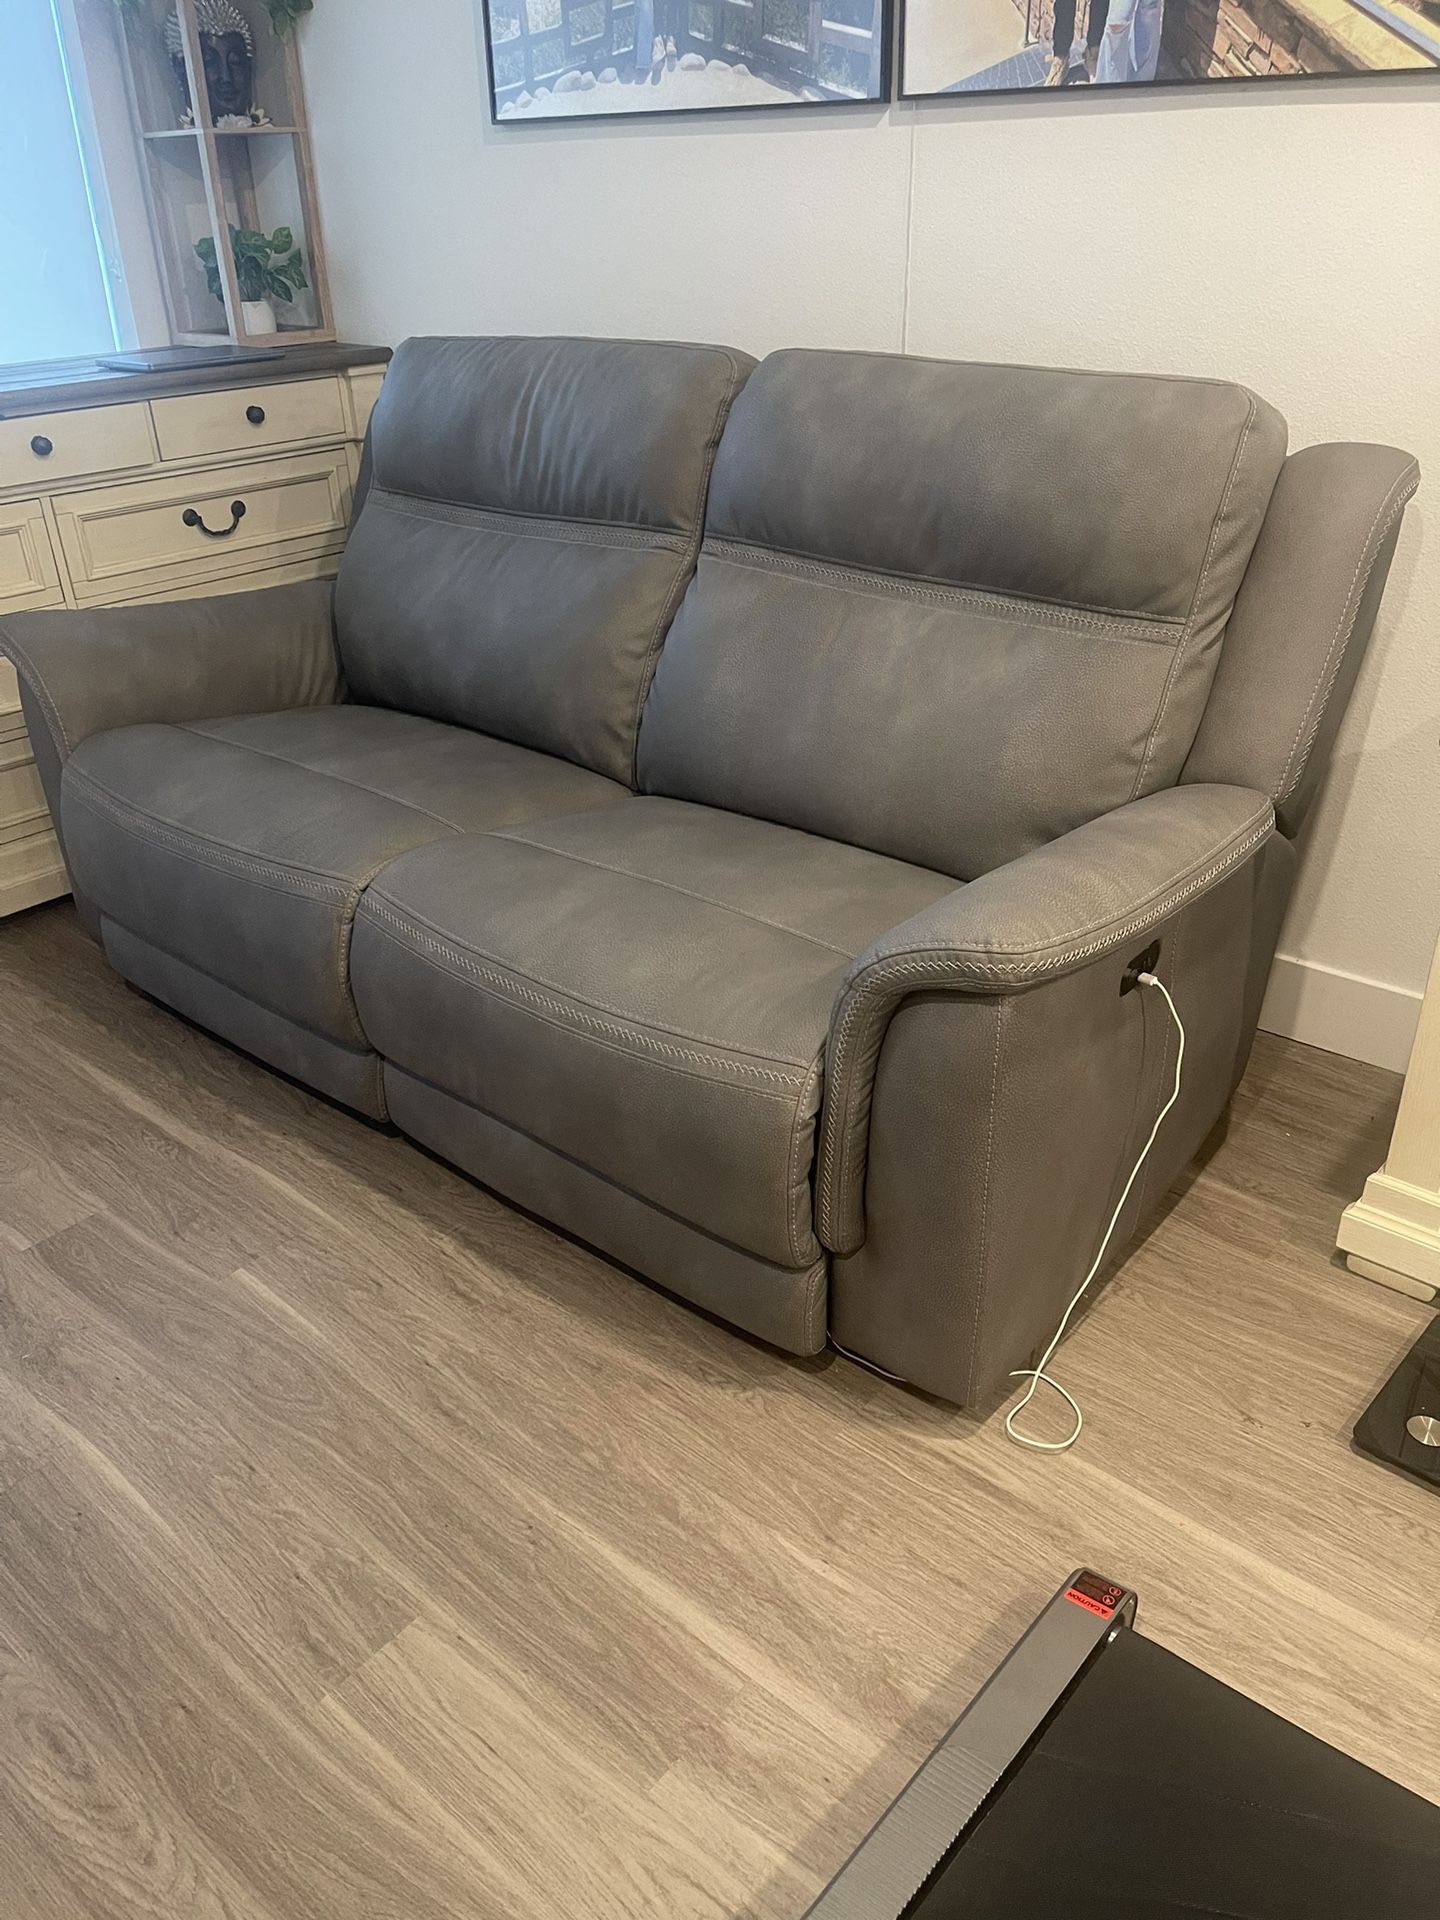 Like New Ashley Furniture Next-gen Durapella Dual Power Reclining Sofa $500 Originally $1,900